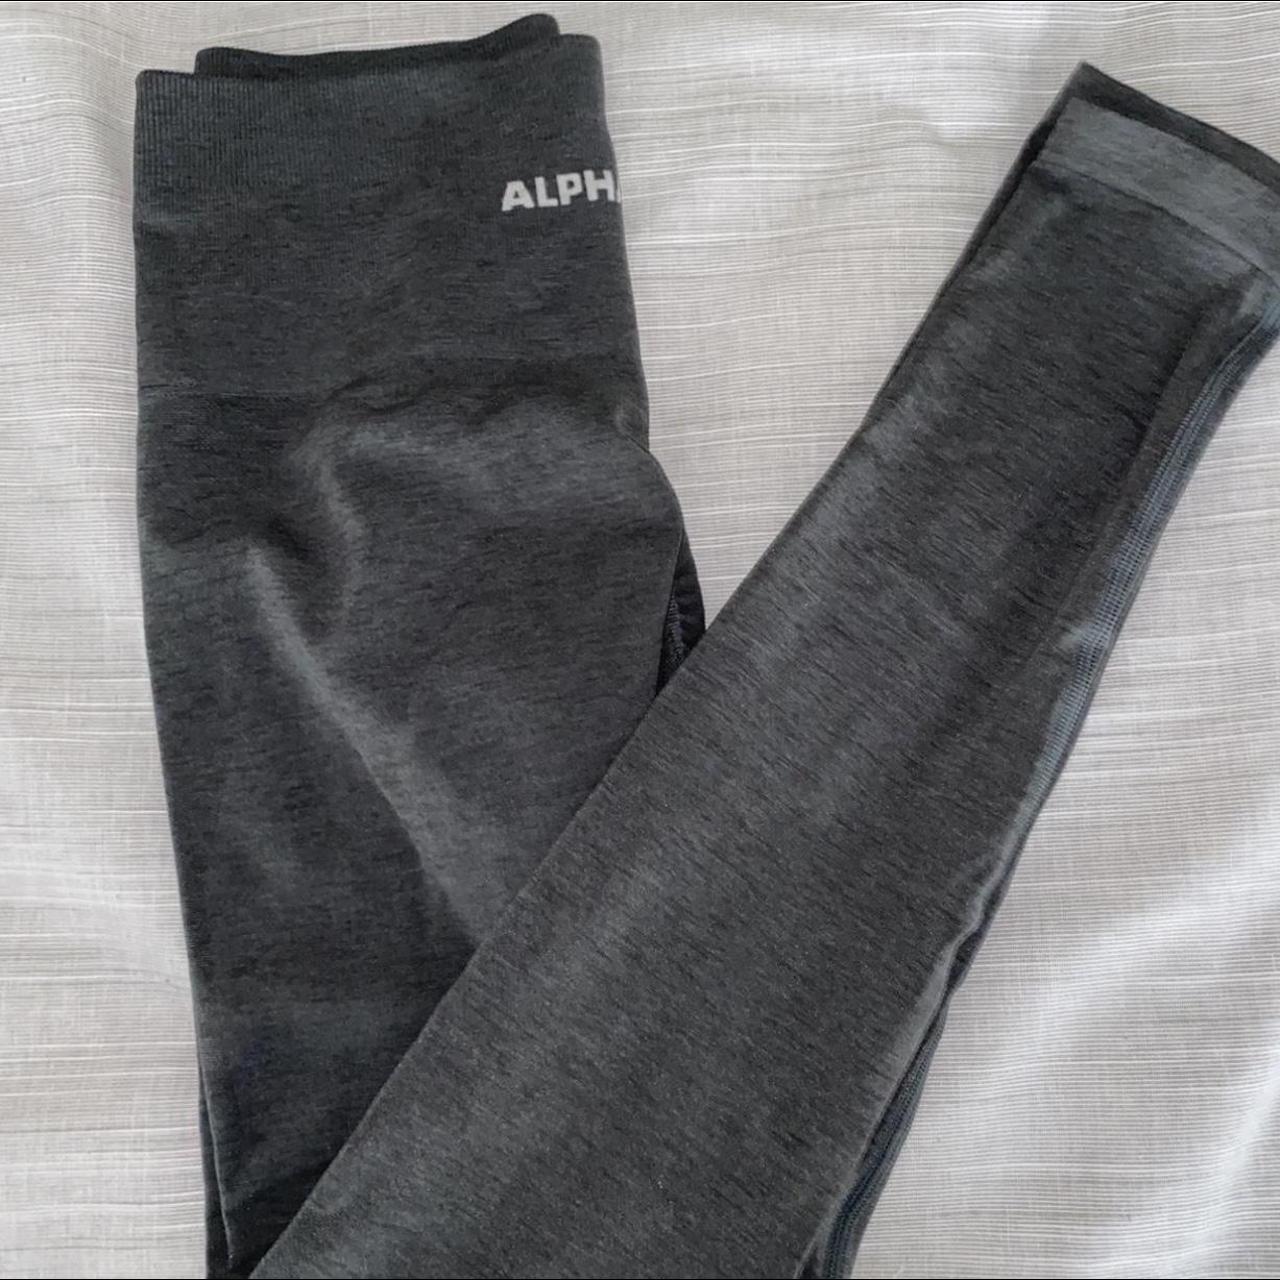 Alphalete leggings size small😎 I worn them only a - Depop